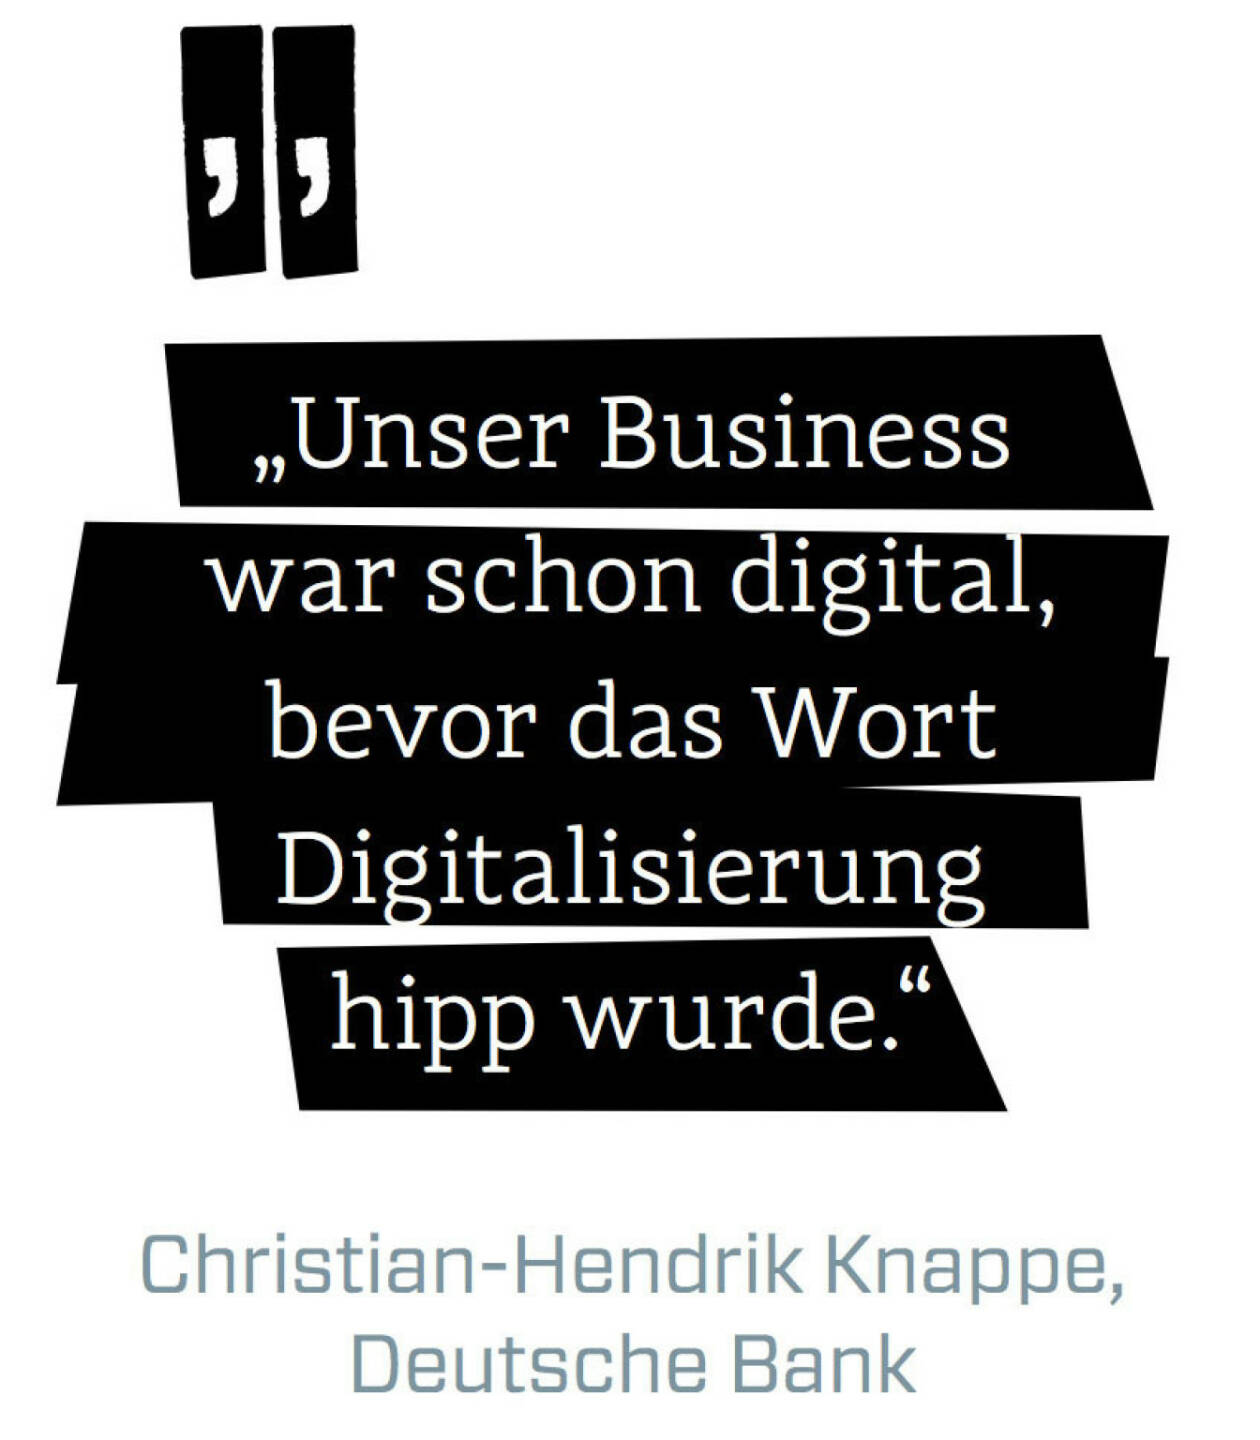 Unser Business war schon digital, bevor das Wort Digitalisierung hipp wurde. (Christian-Hendrik Knappe, Deutsche Bank)